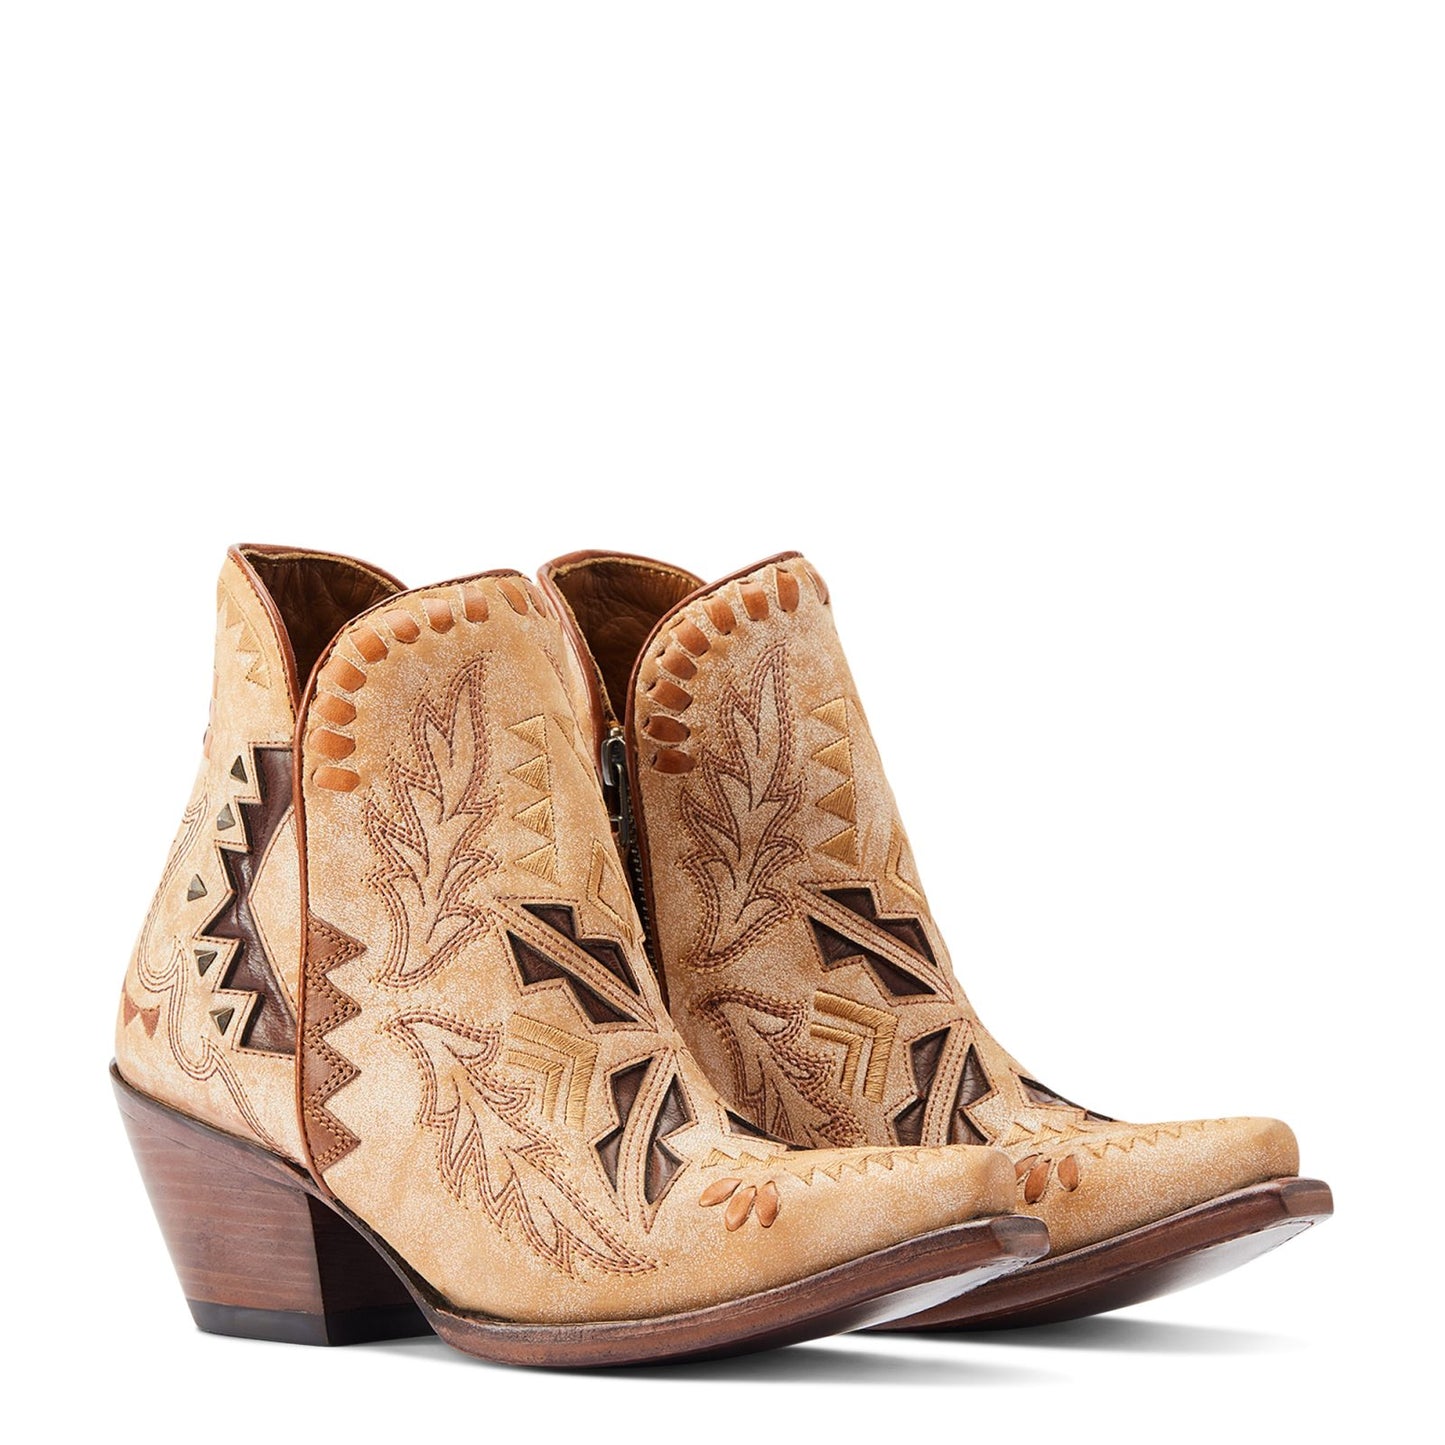 Ariat Women's Crema Mesa Western Boot